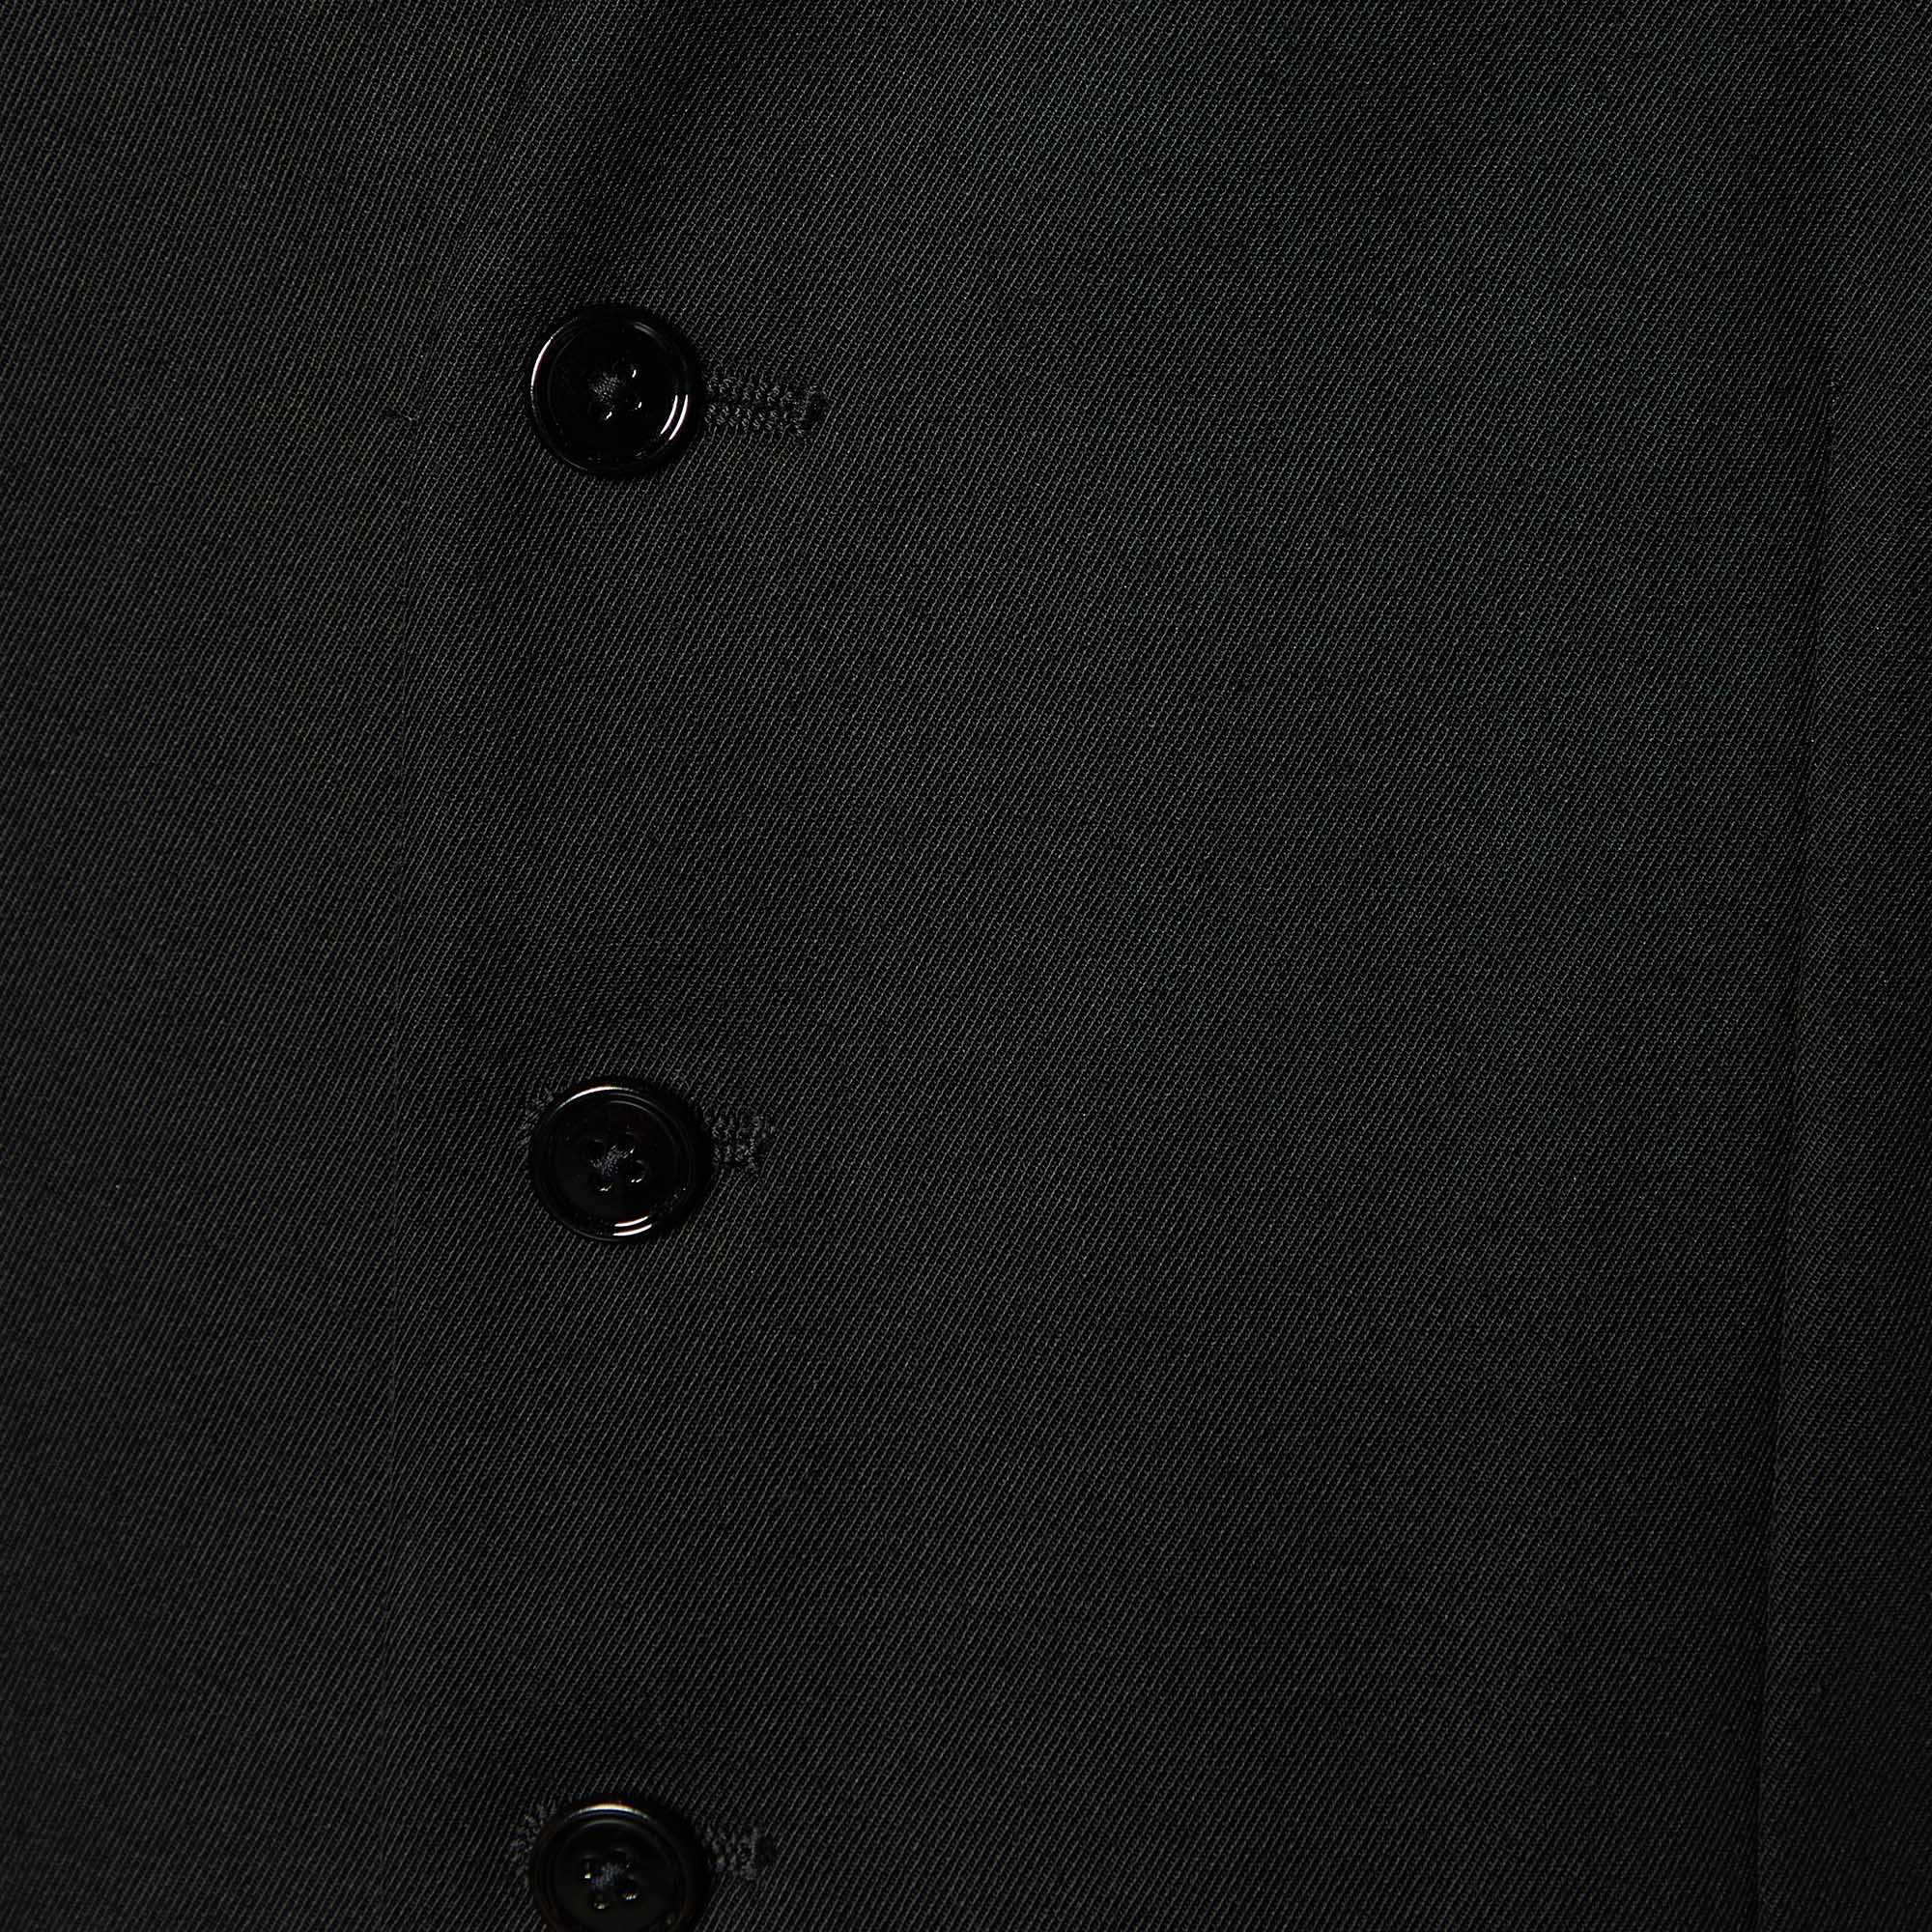 Dolce & Gabbana Black Wool & Silk Button Front Waistcoat M